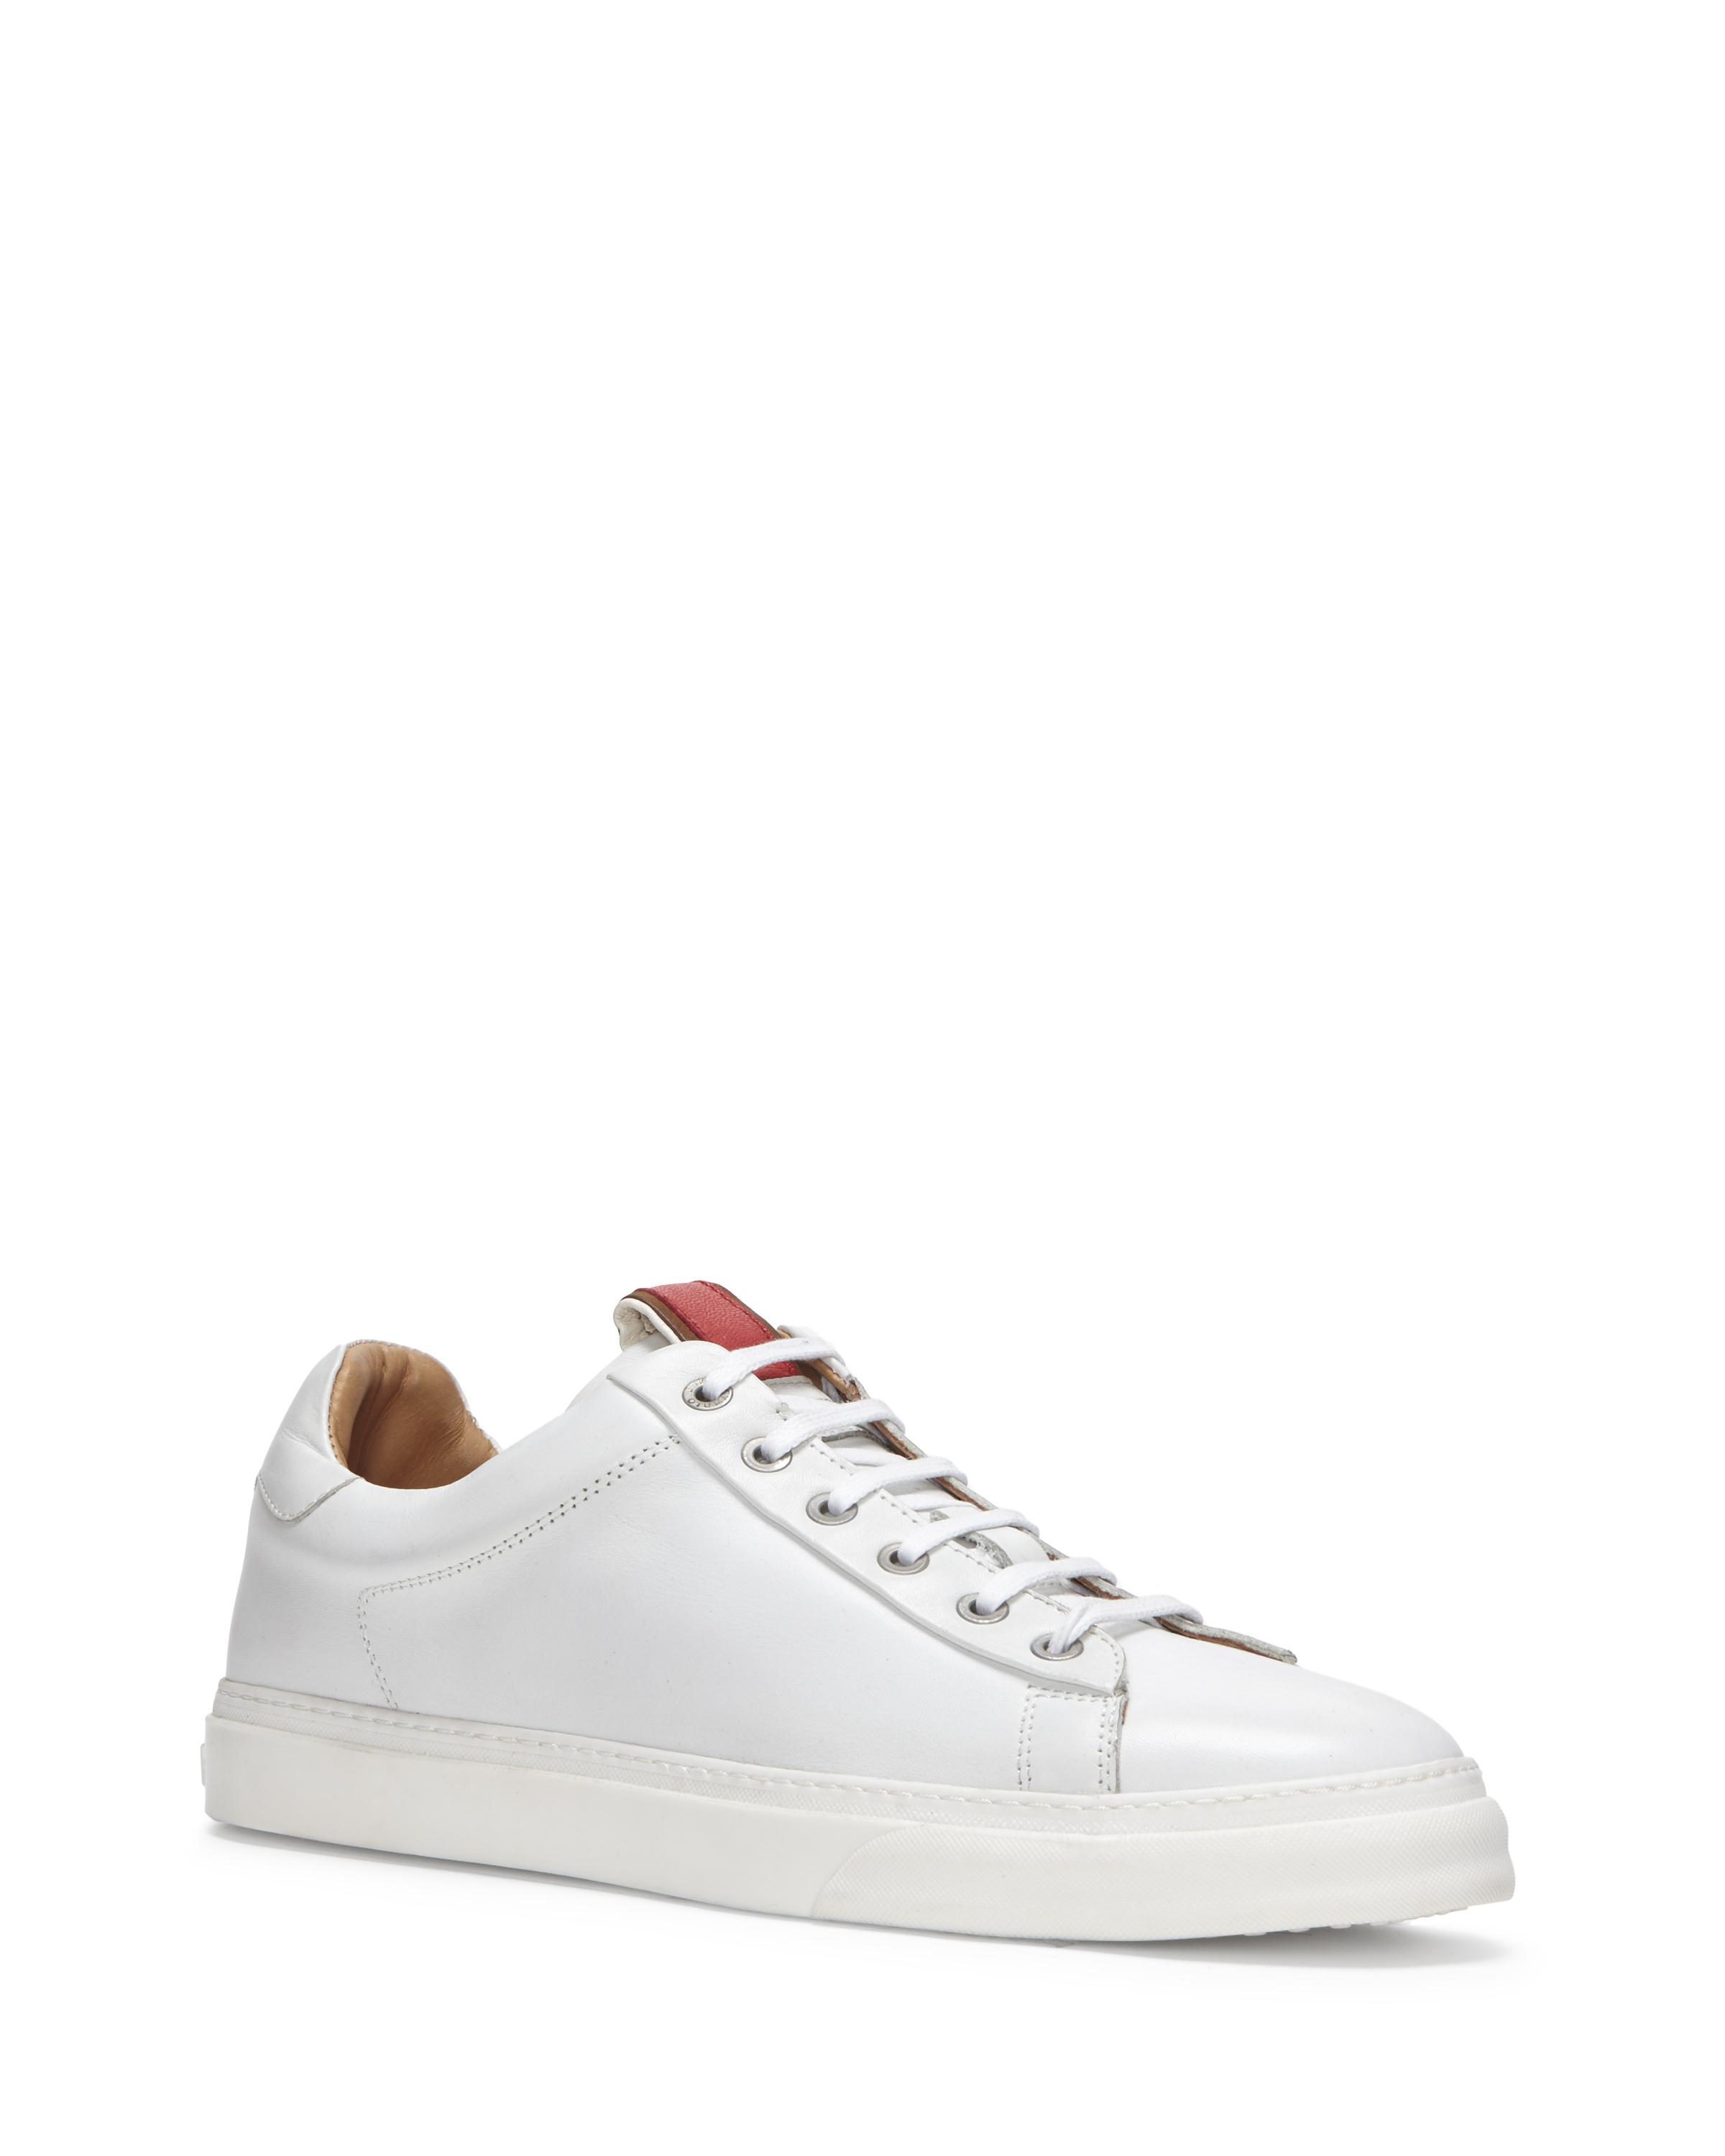 Lyst - Vince Camuto Quin – Stripe-detail Sneaker in White for Men